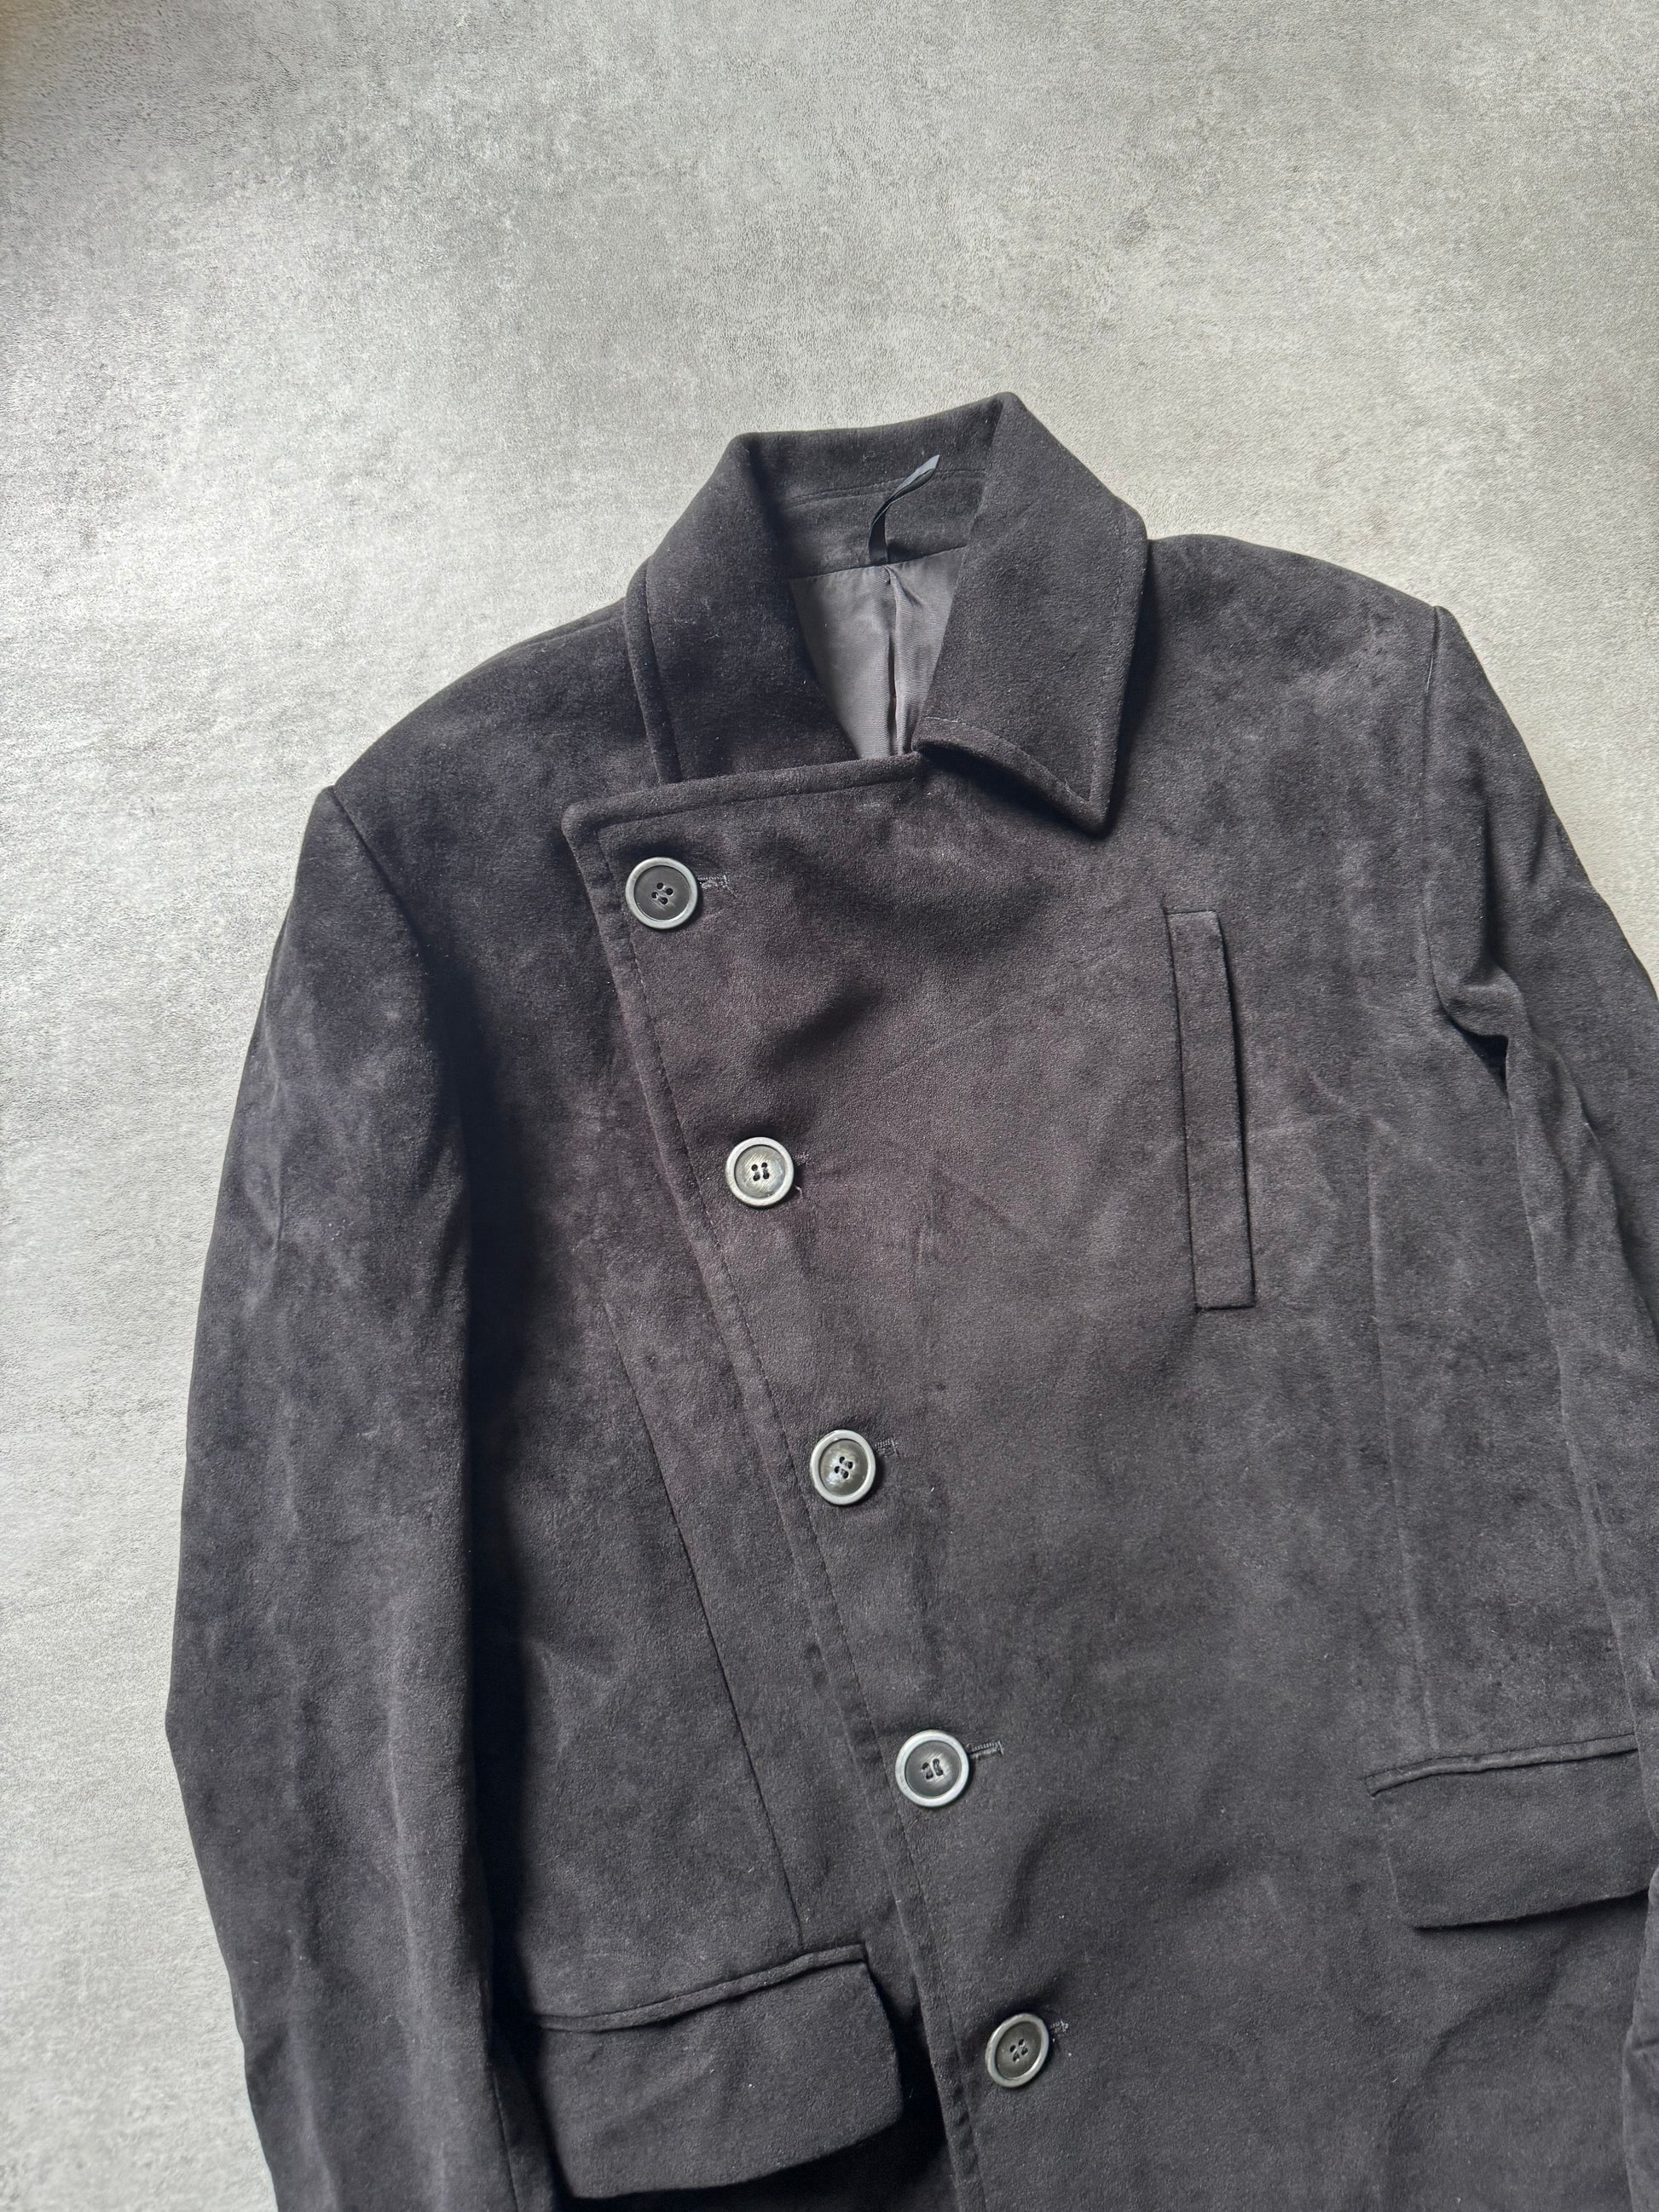 Givenchy Asymmetrical Black Contemporary Coat (M) - 8